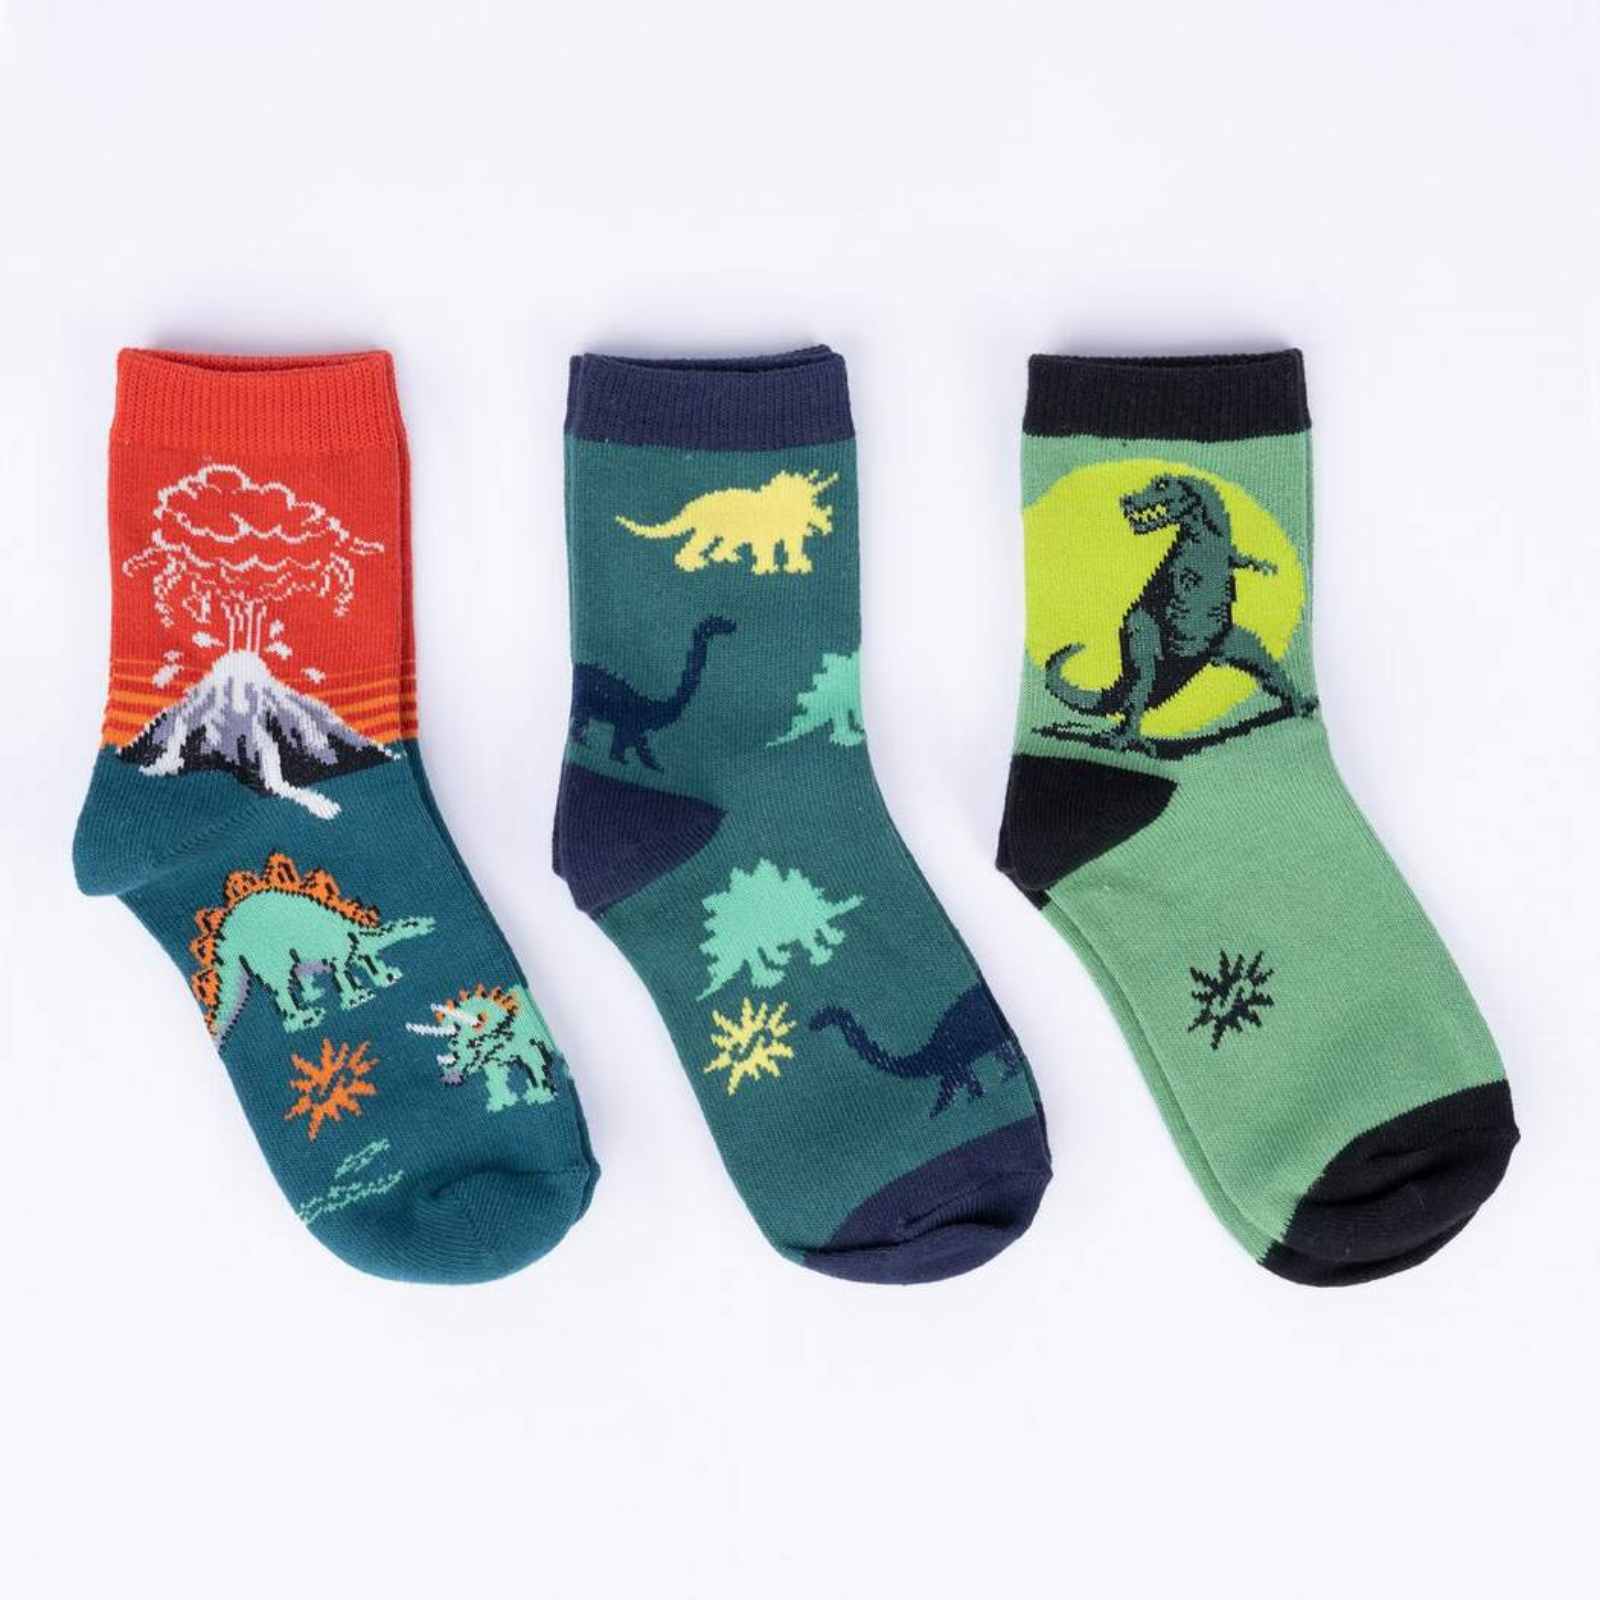 Sock It To Me Dinosaur Days 3-pack kids' crew socks (GLOWS IN THE DARK!) featuring three styles of dinosaur-themed socks on display